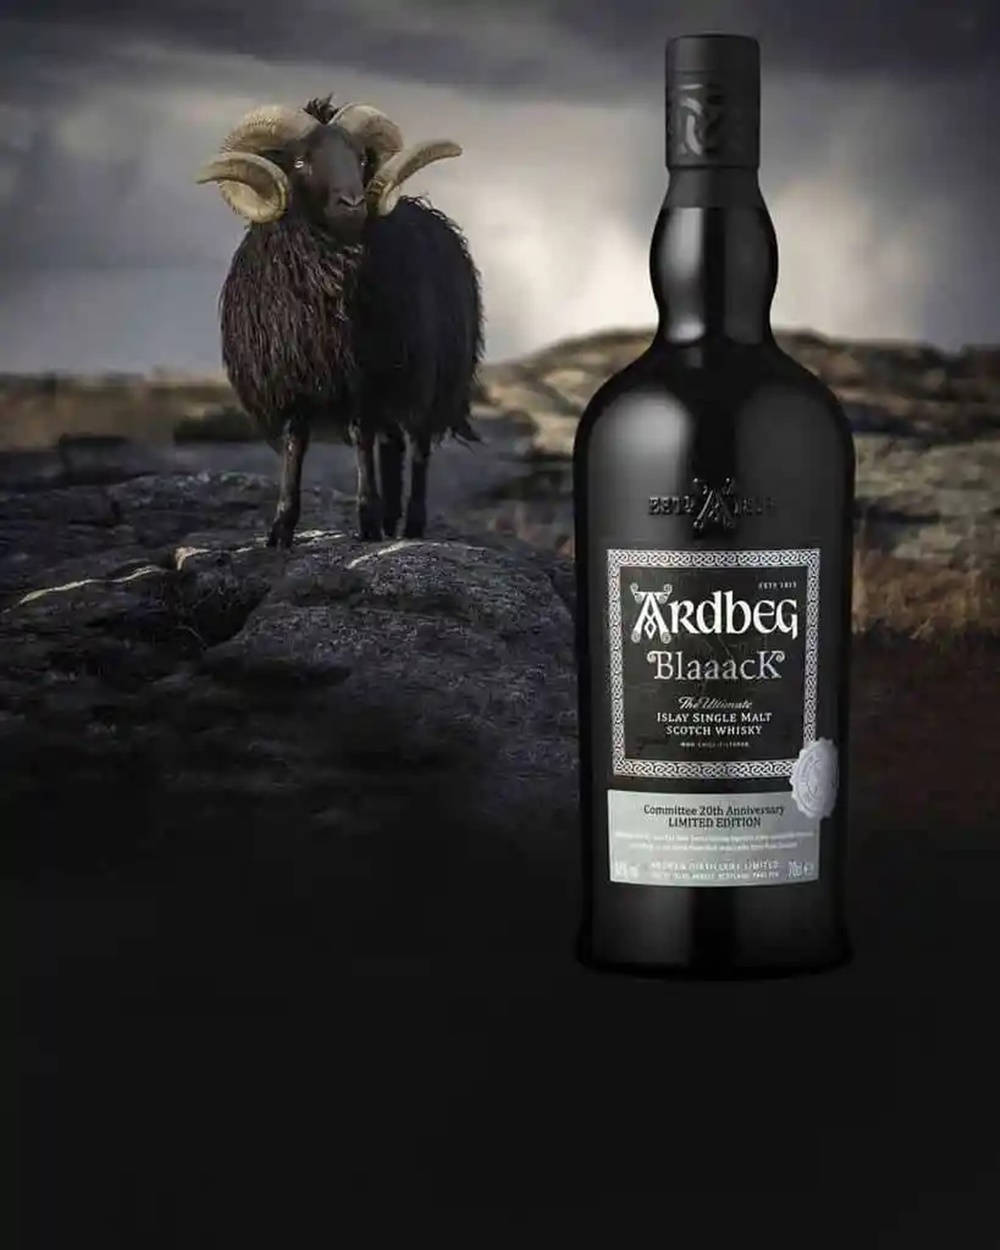 Artful Ardbeg Blaaack Whisky Bottle Displayed with a Black Sheep Wallpaper